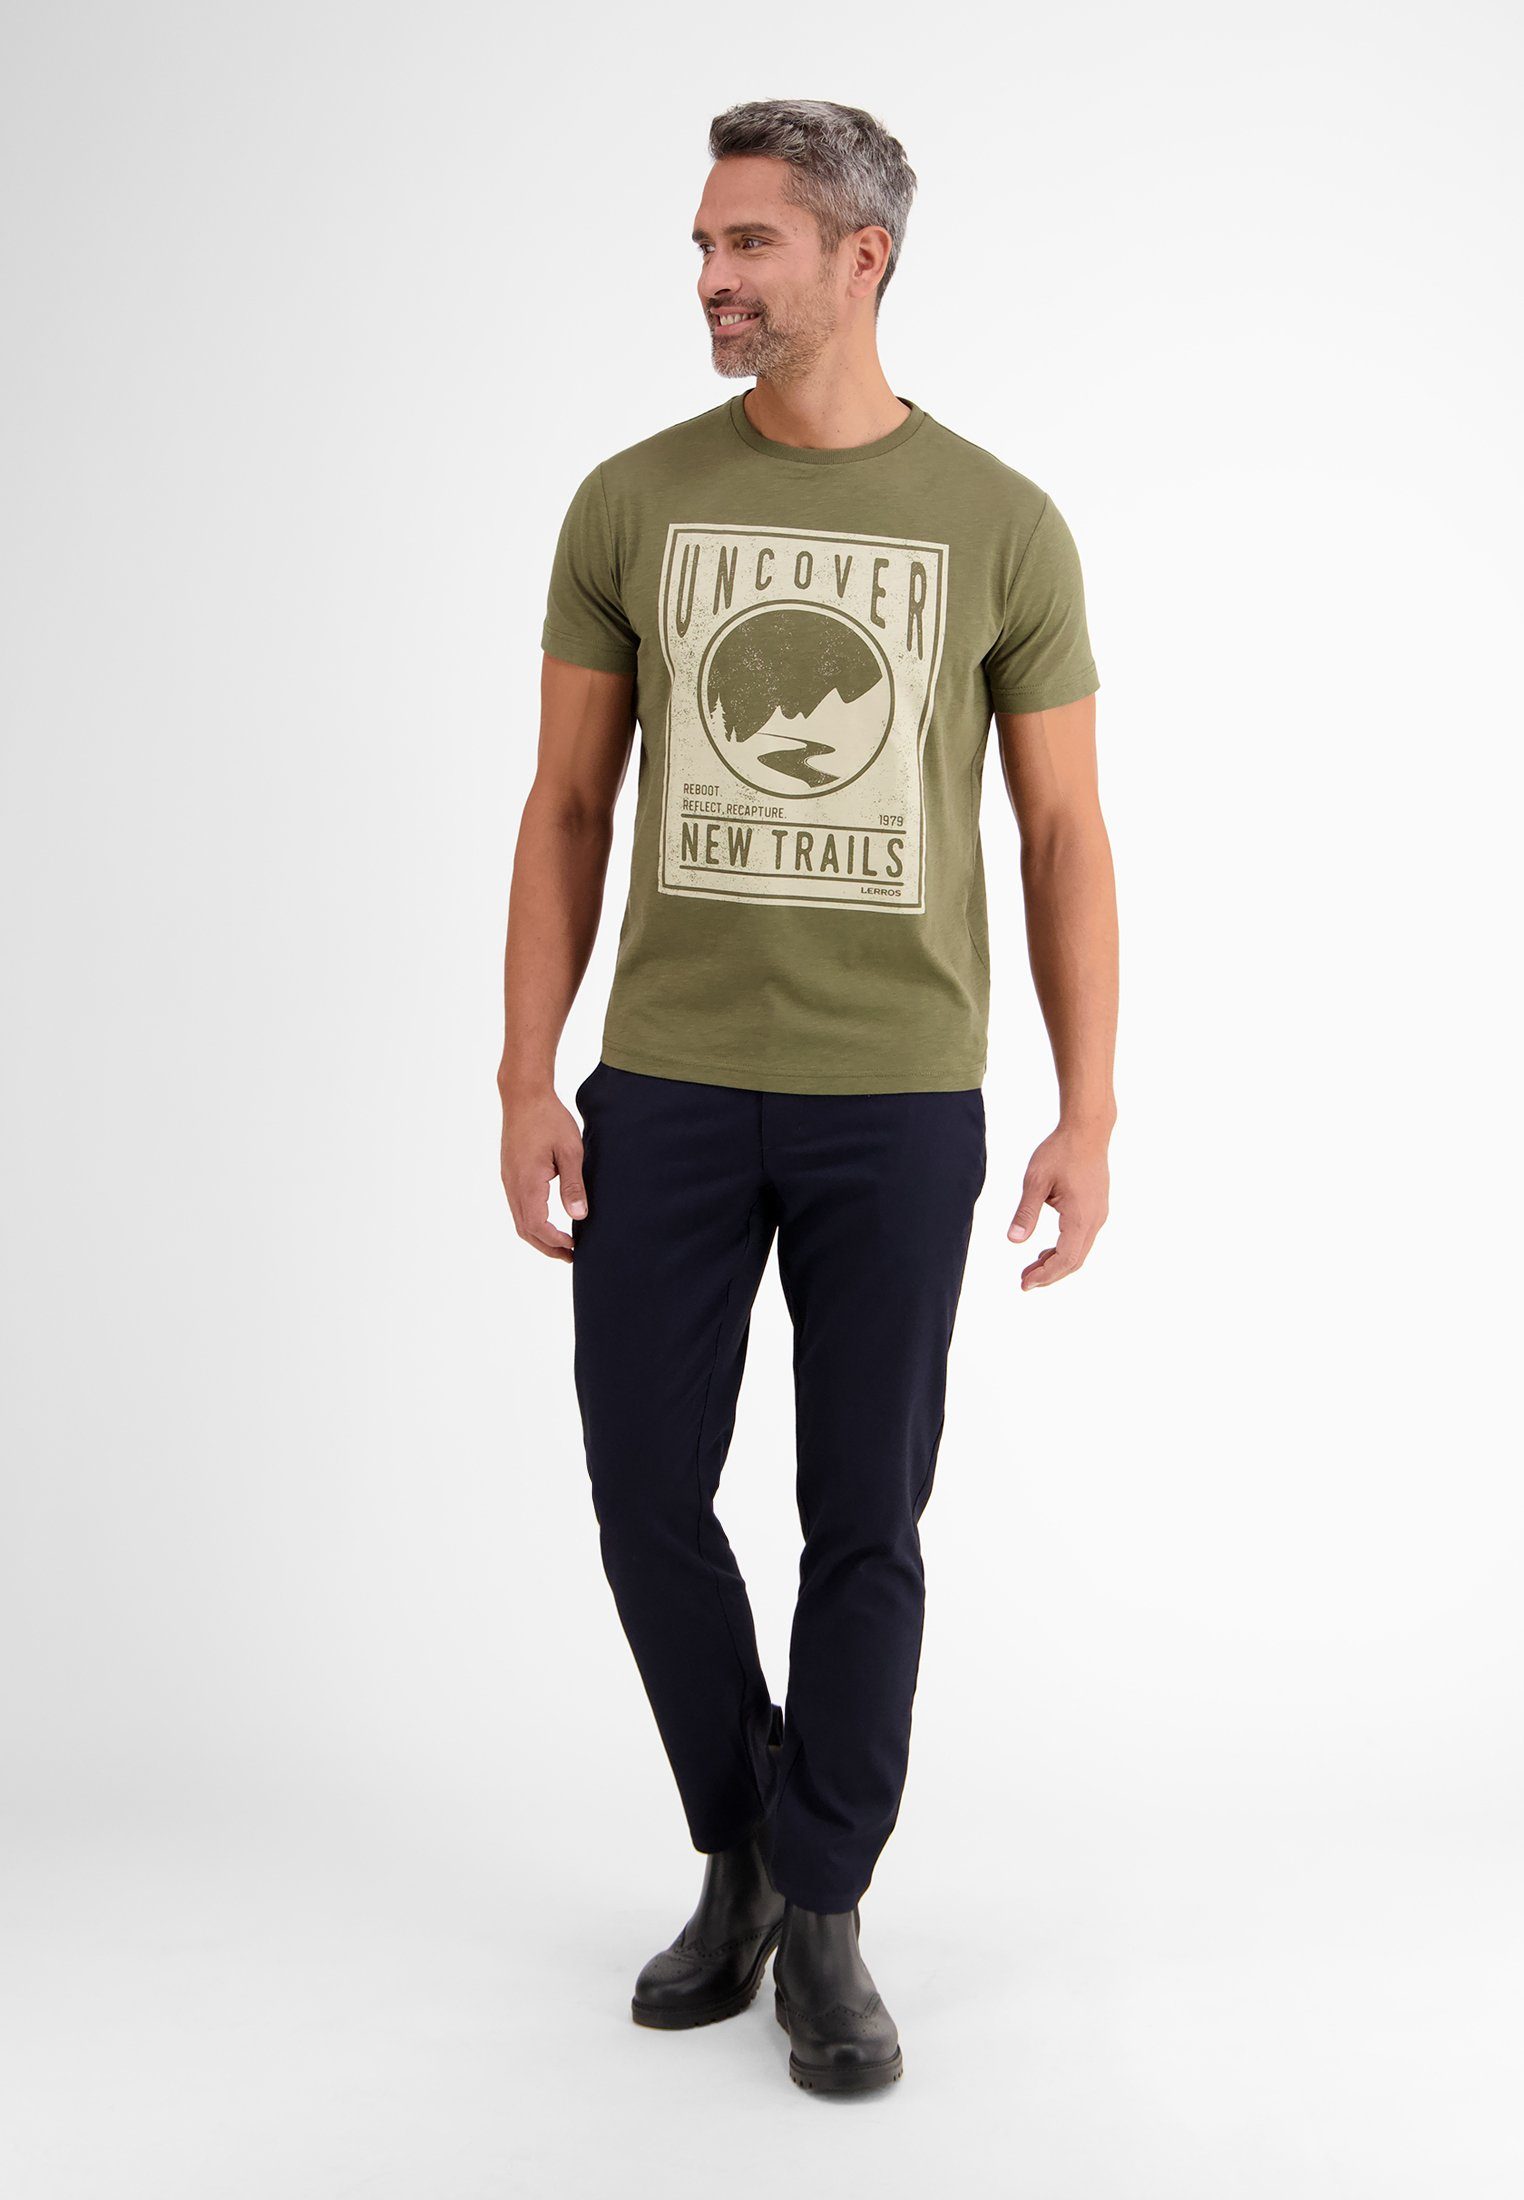 new trails* LERROS *Uncover LERROS Print-T-Shirt OLIV GREEN T-Shirt